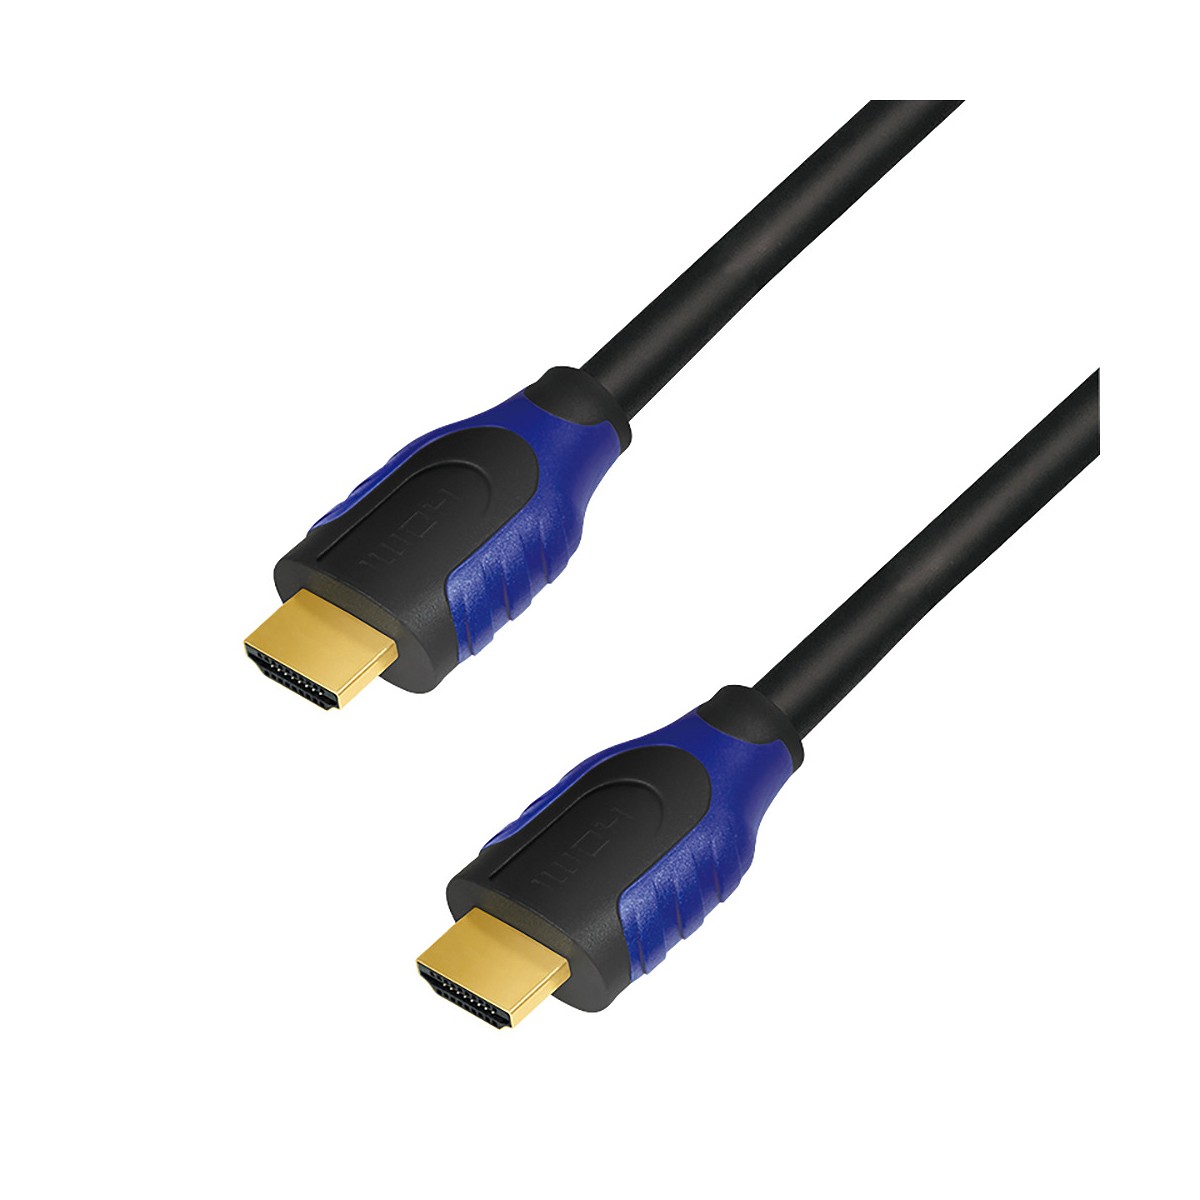 Cable hdmi 15m 2.0 con ethernet, 4k2k/60hz, negro